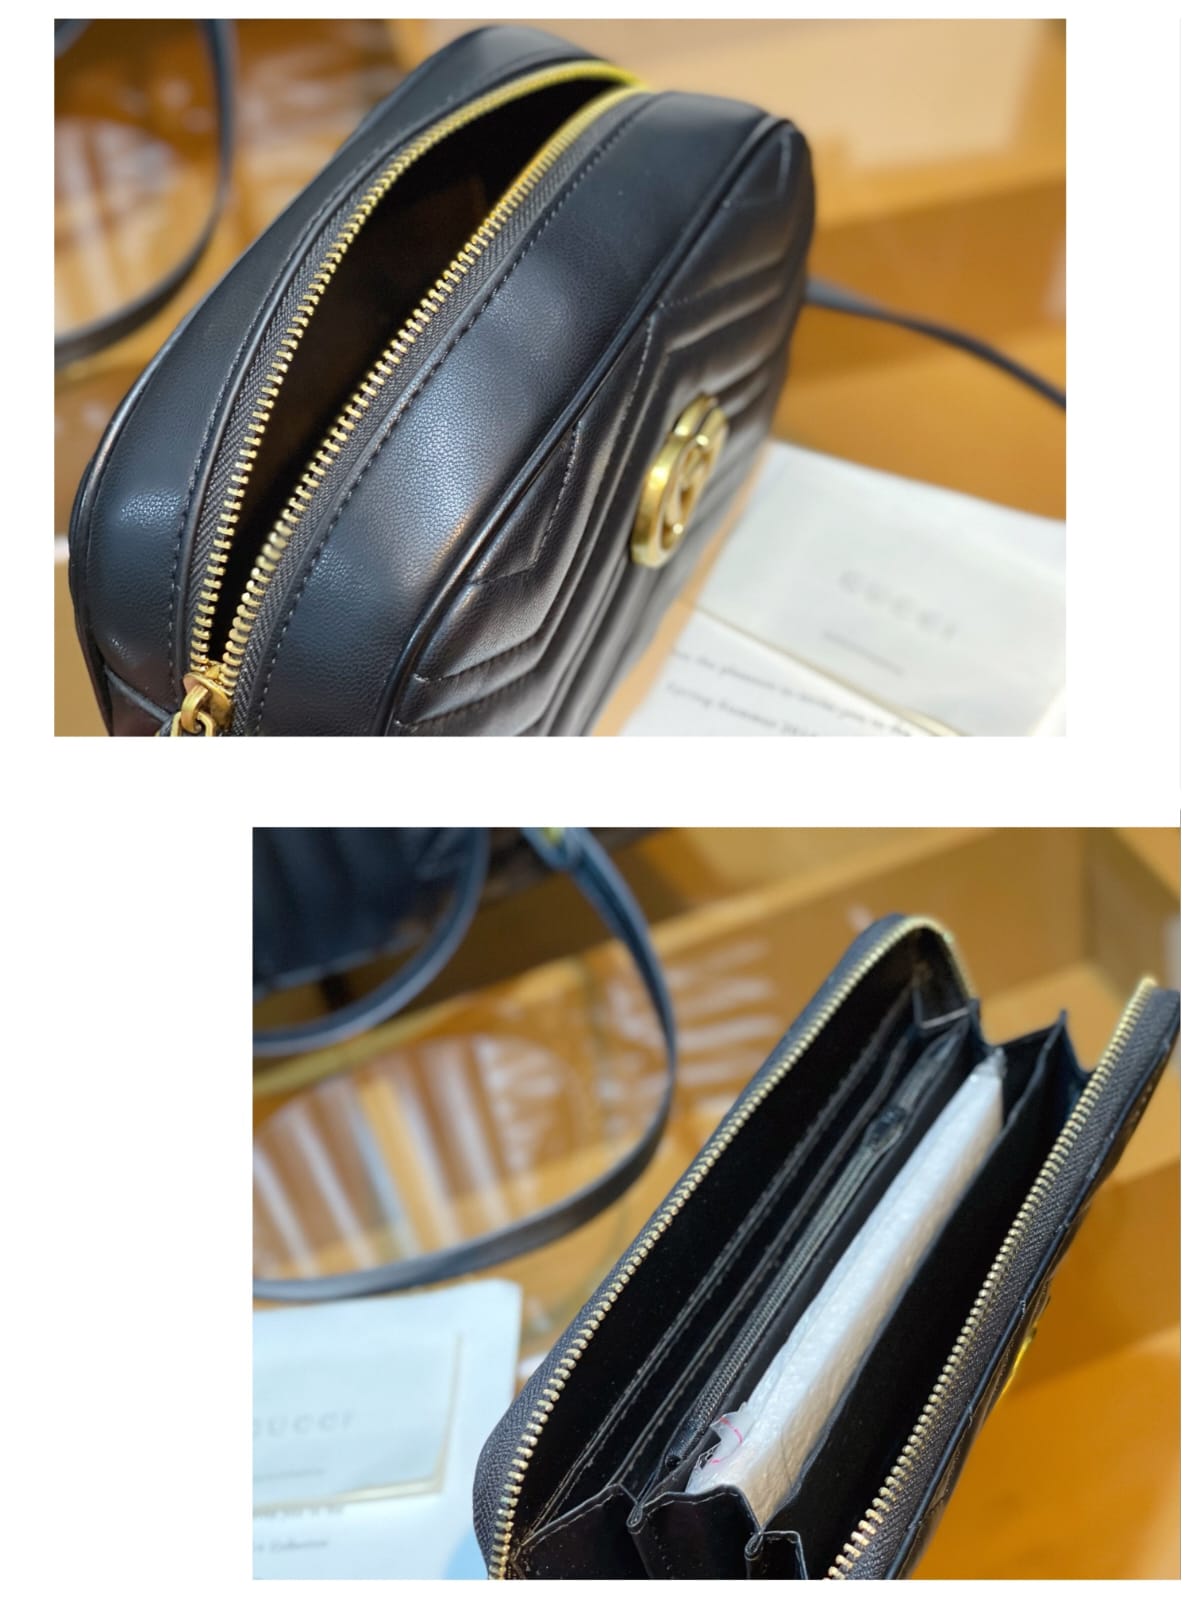 Gucci Marmont Tote Handbag Sets